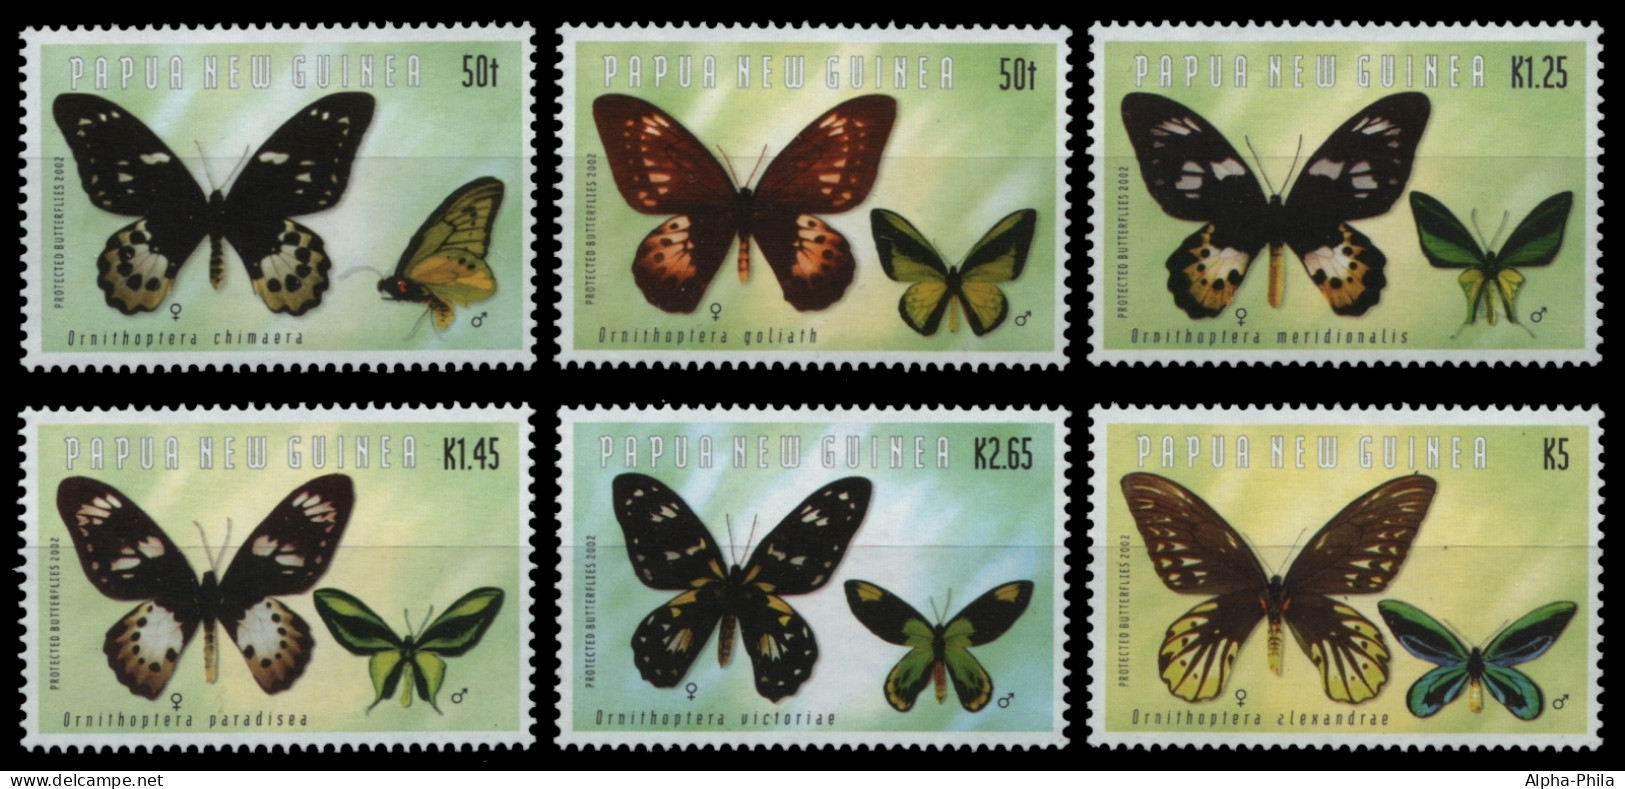 Papua-Neuguinea 2002 - Mi-Nr. 955-960 ** - MNH - Schmetterlinge / Butterflies - Papua-Neuguinea